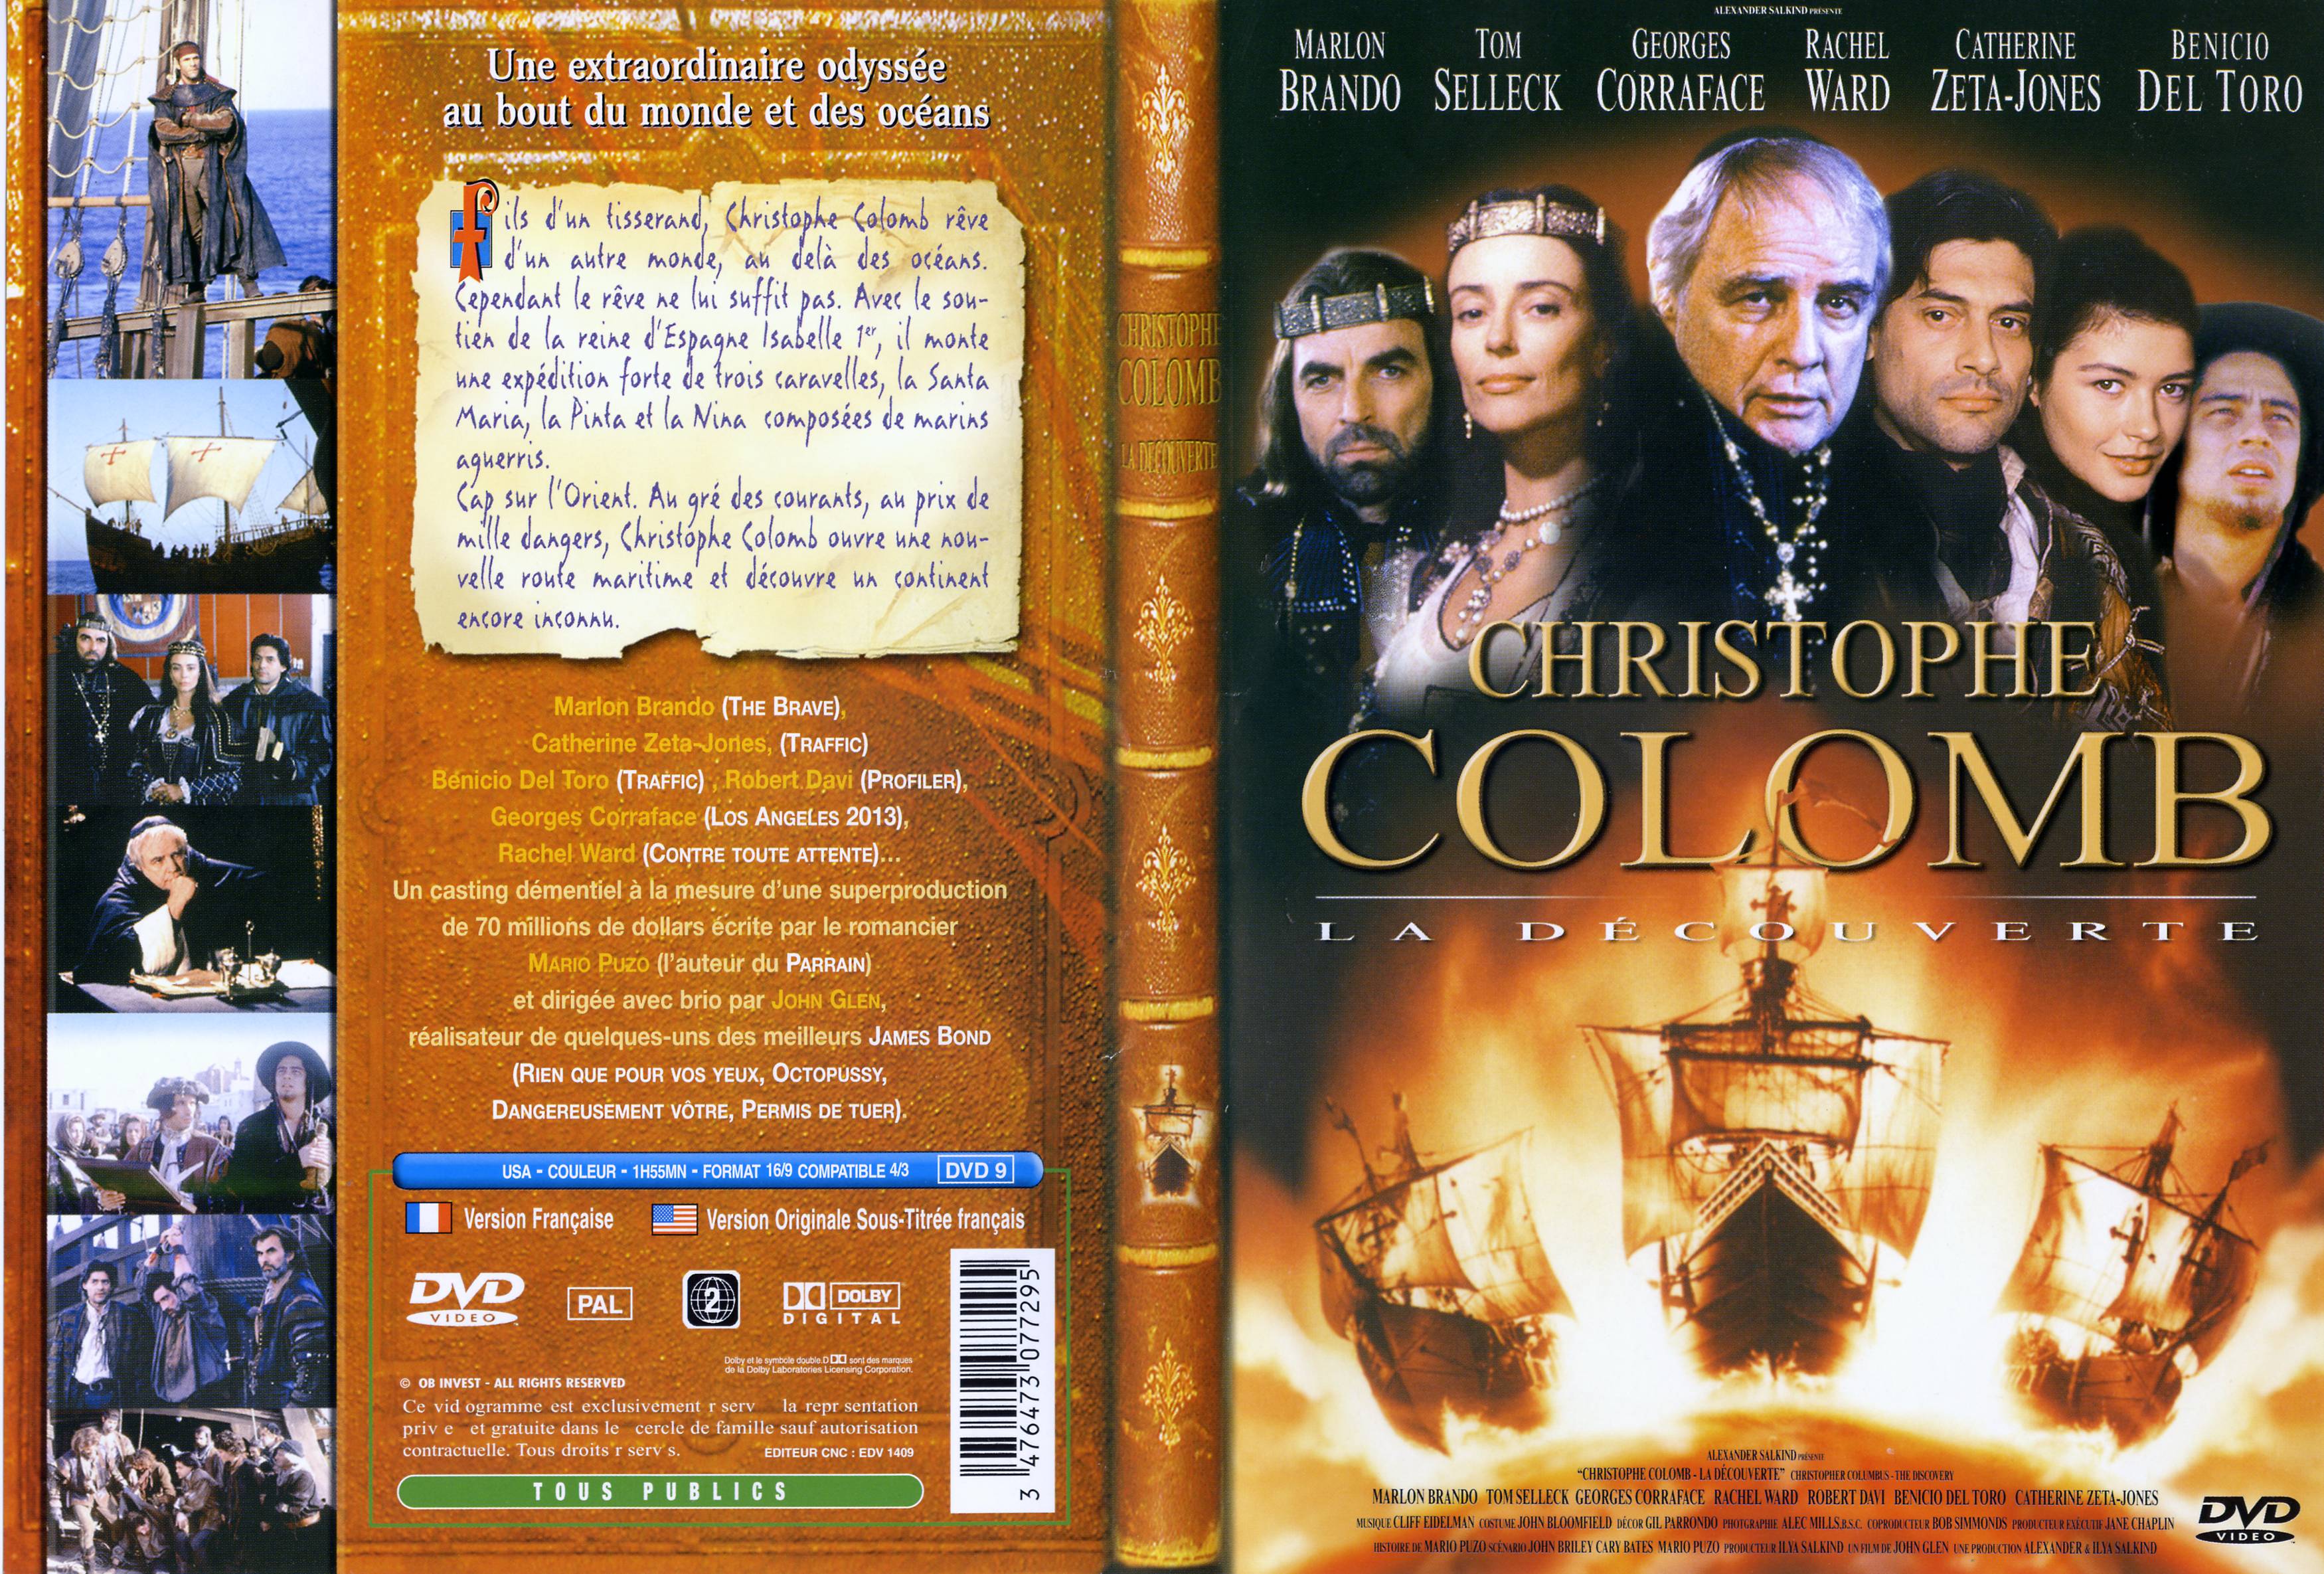 Jaquette DVD Christophe Colomb